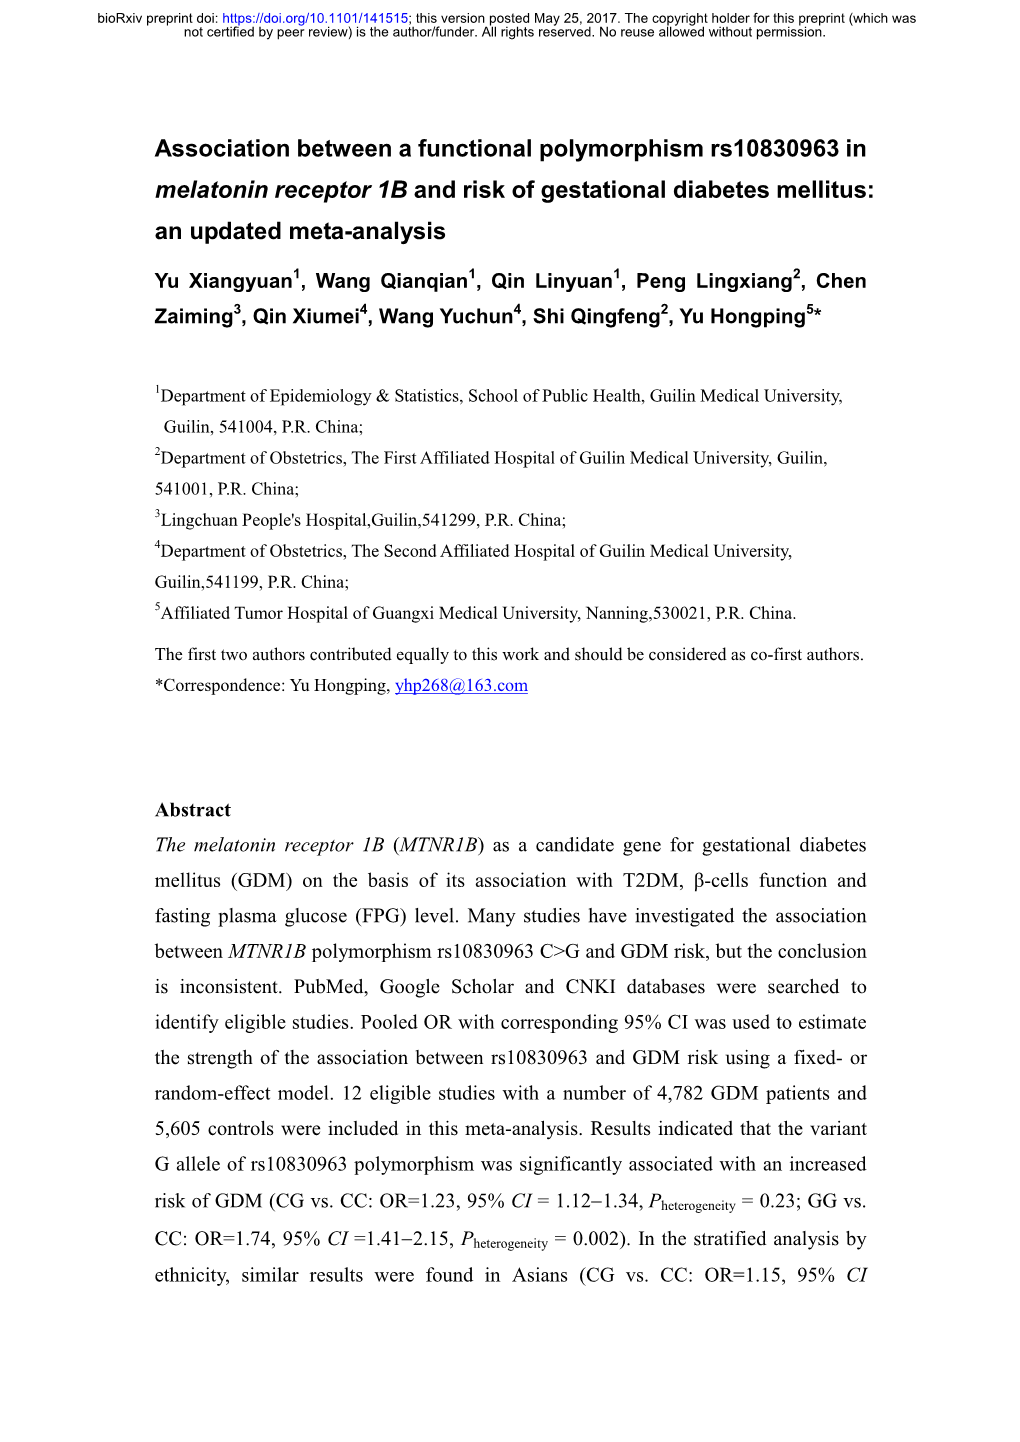 Association Between a Functional Polymorphism Rs10830963 in Melatonin Receptor 1B and Risk of Gestational Diabetes Mellitus: an Updated Meta-Analysis